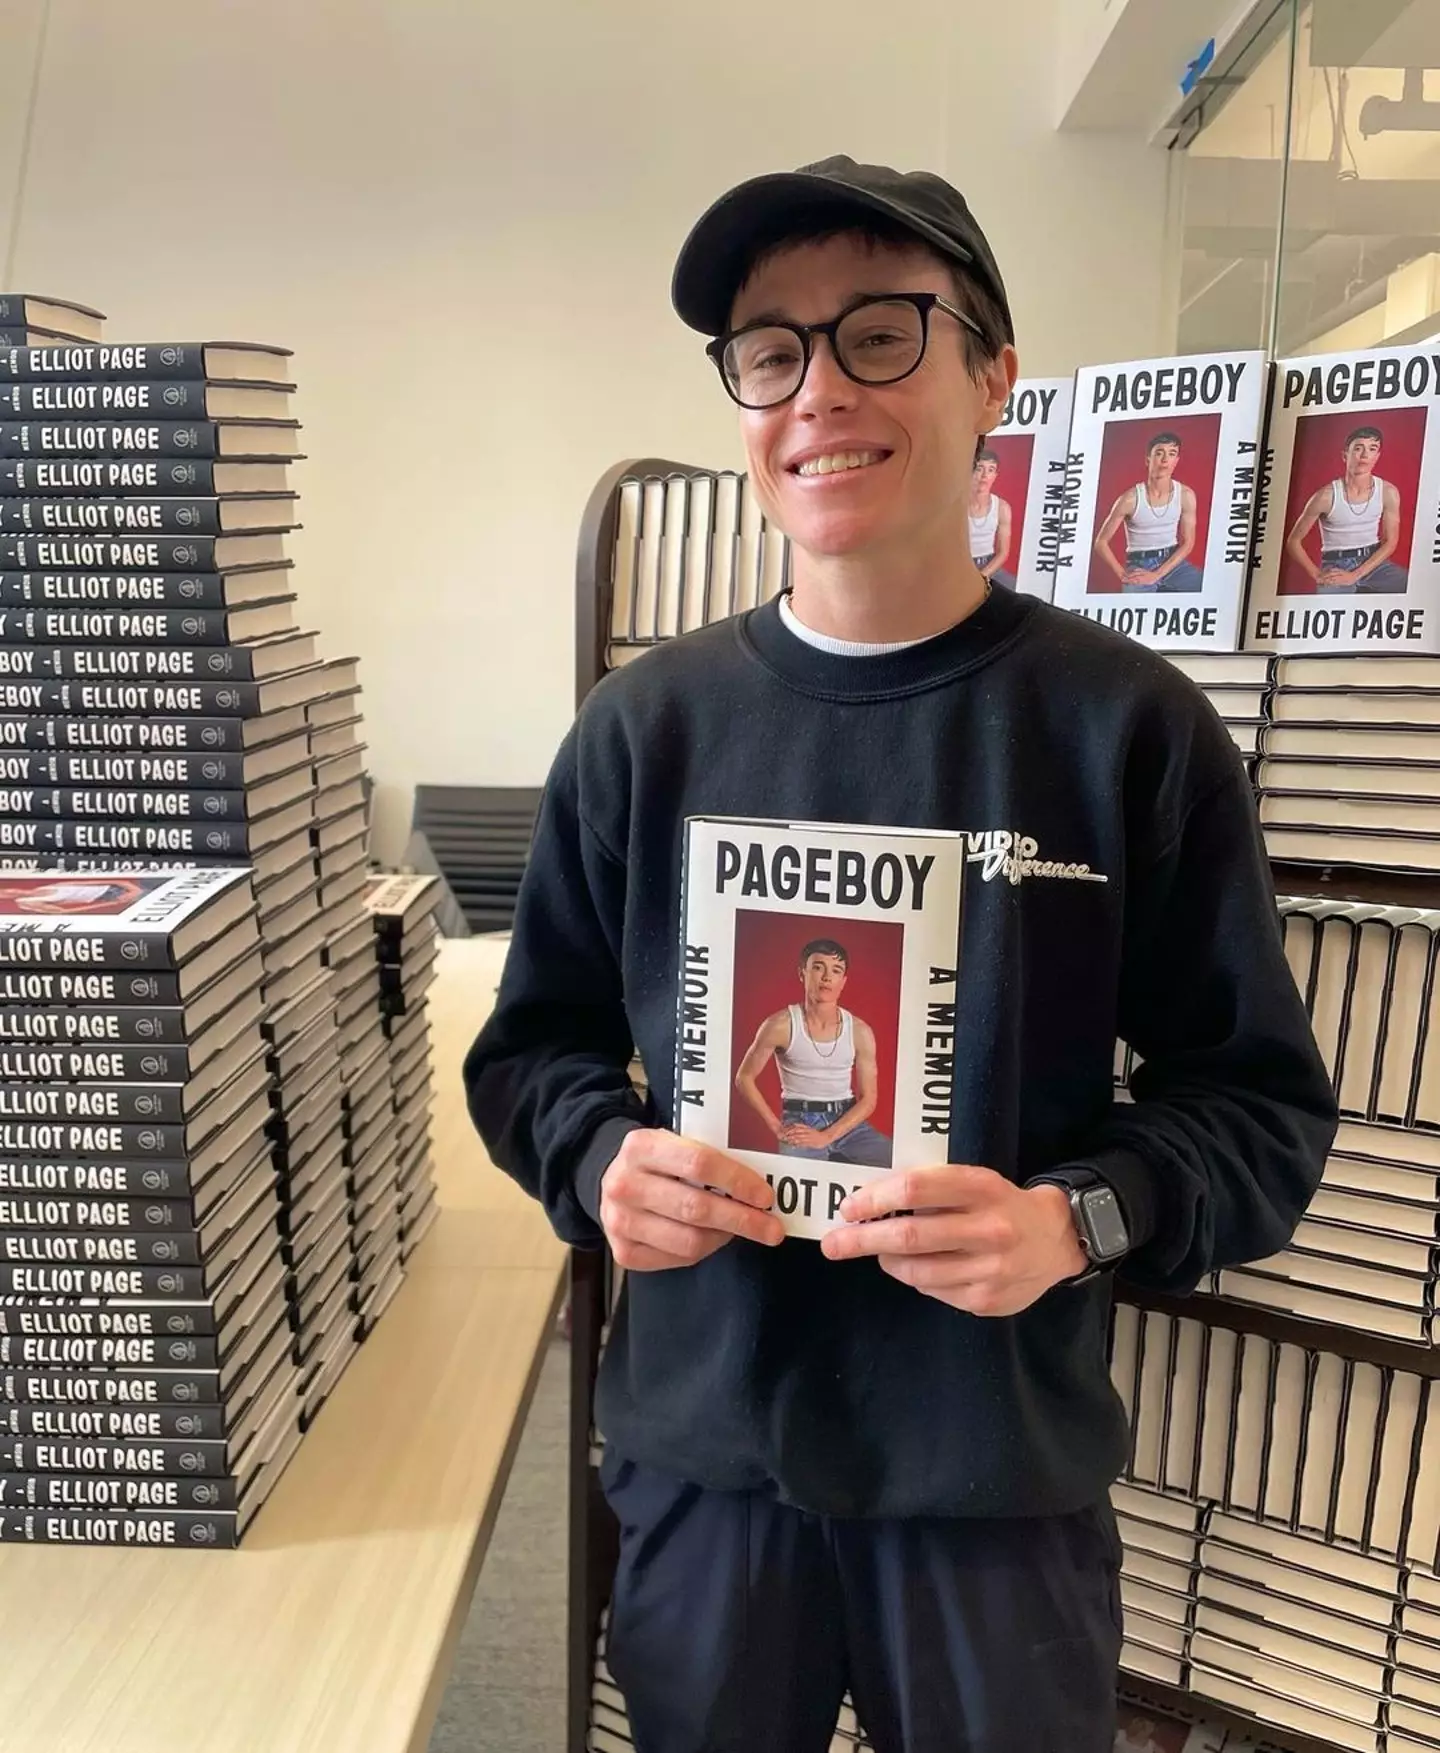 Elliot Page is releasing a new memoir, Pageboy.